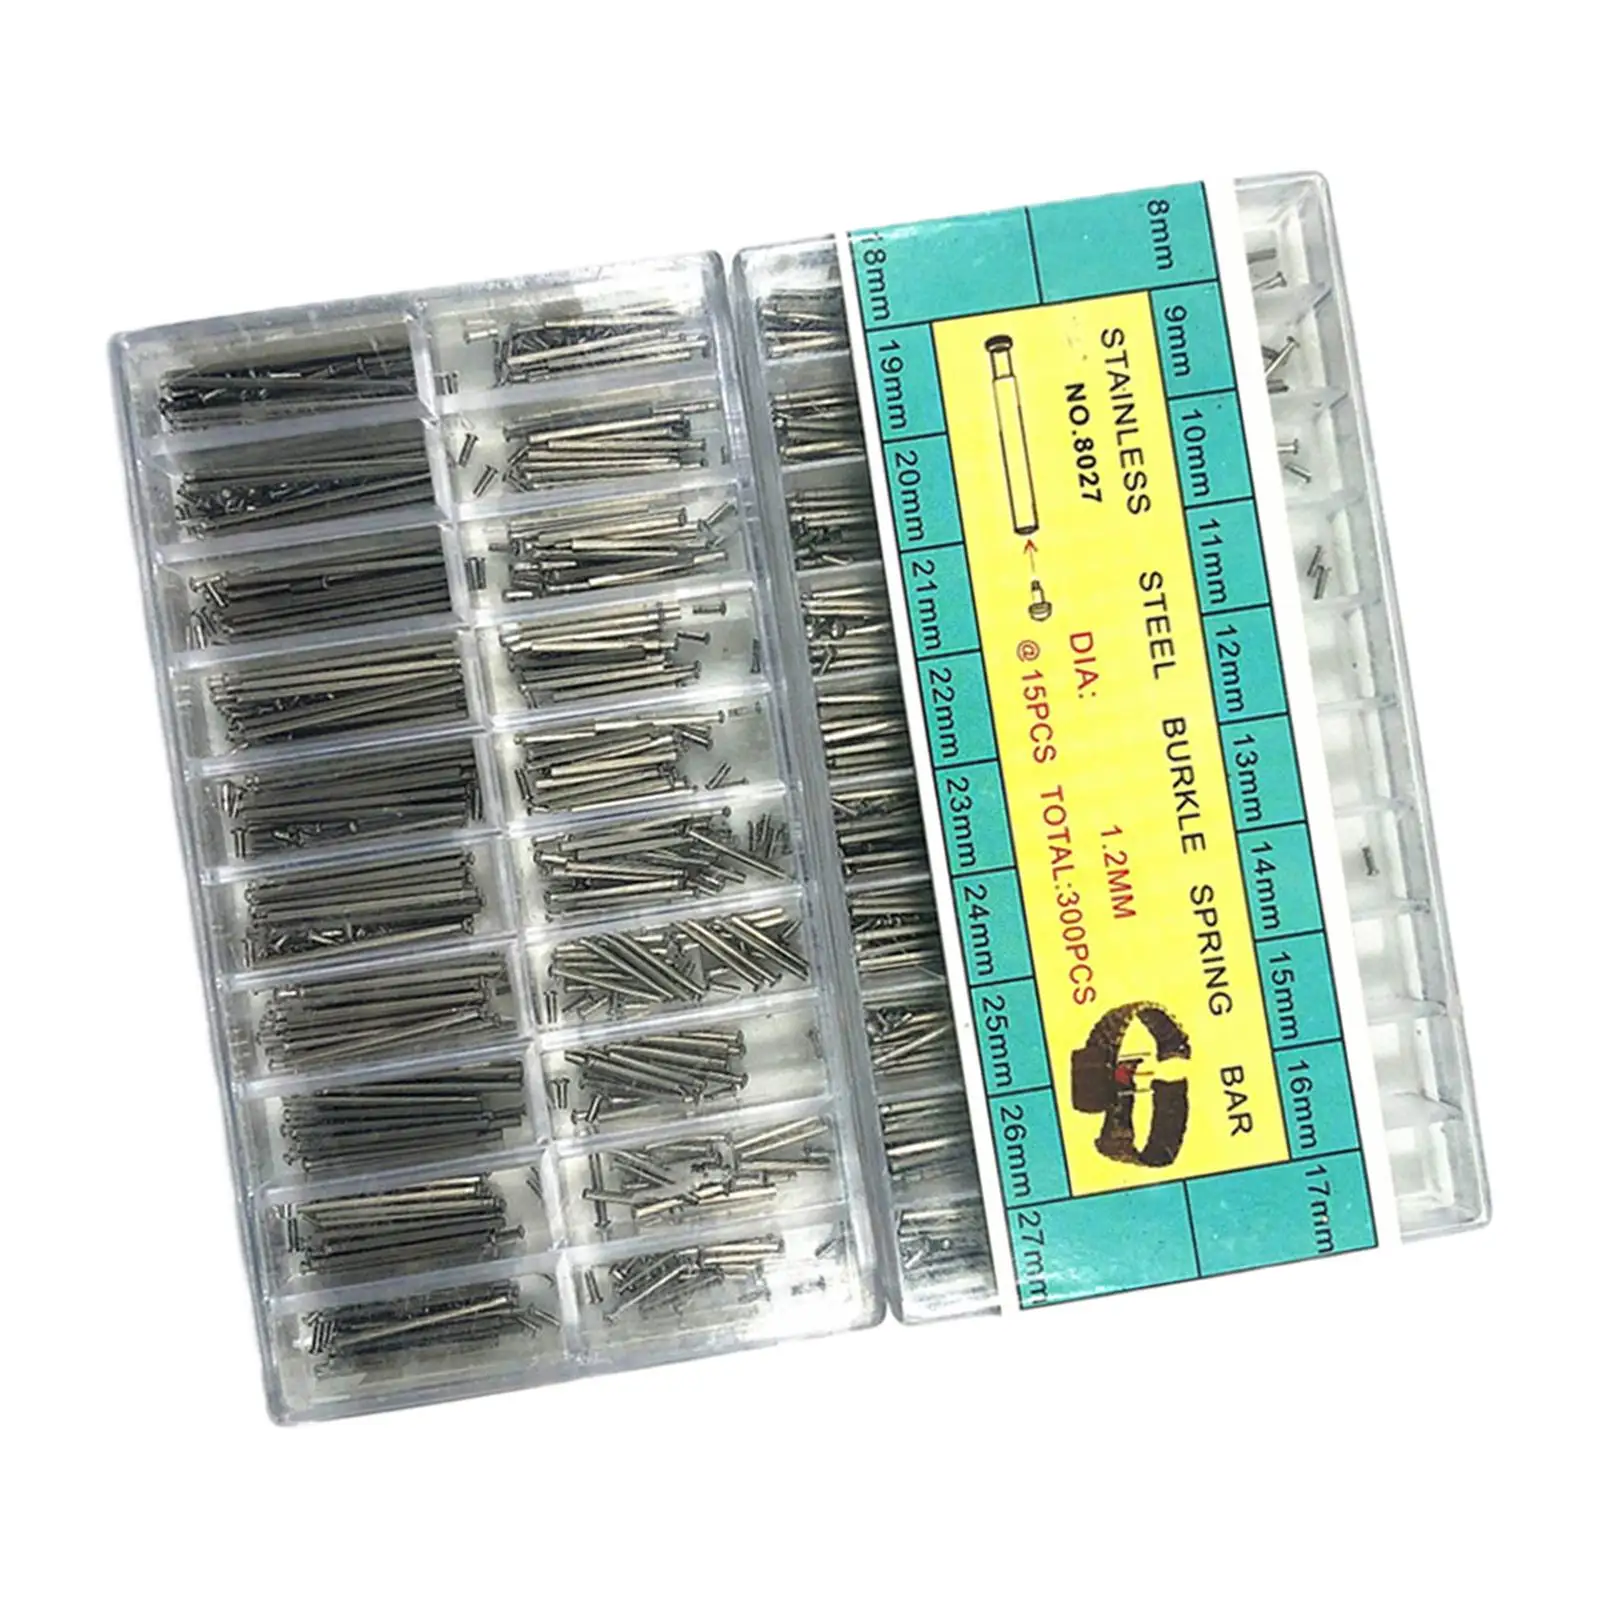 Watch Spring Bars 300pcs in -27mm  Pins Repair Replacement Pins Tool 